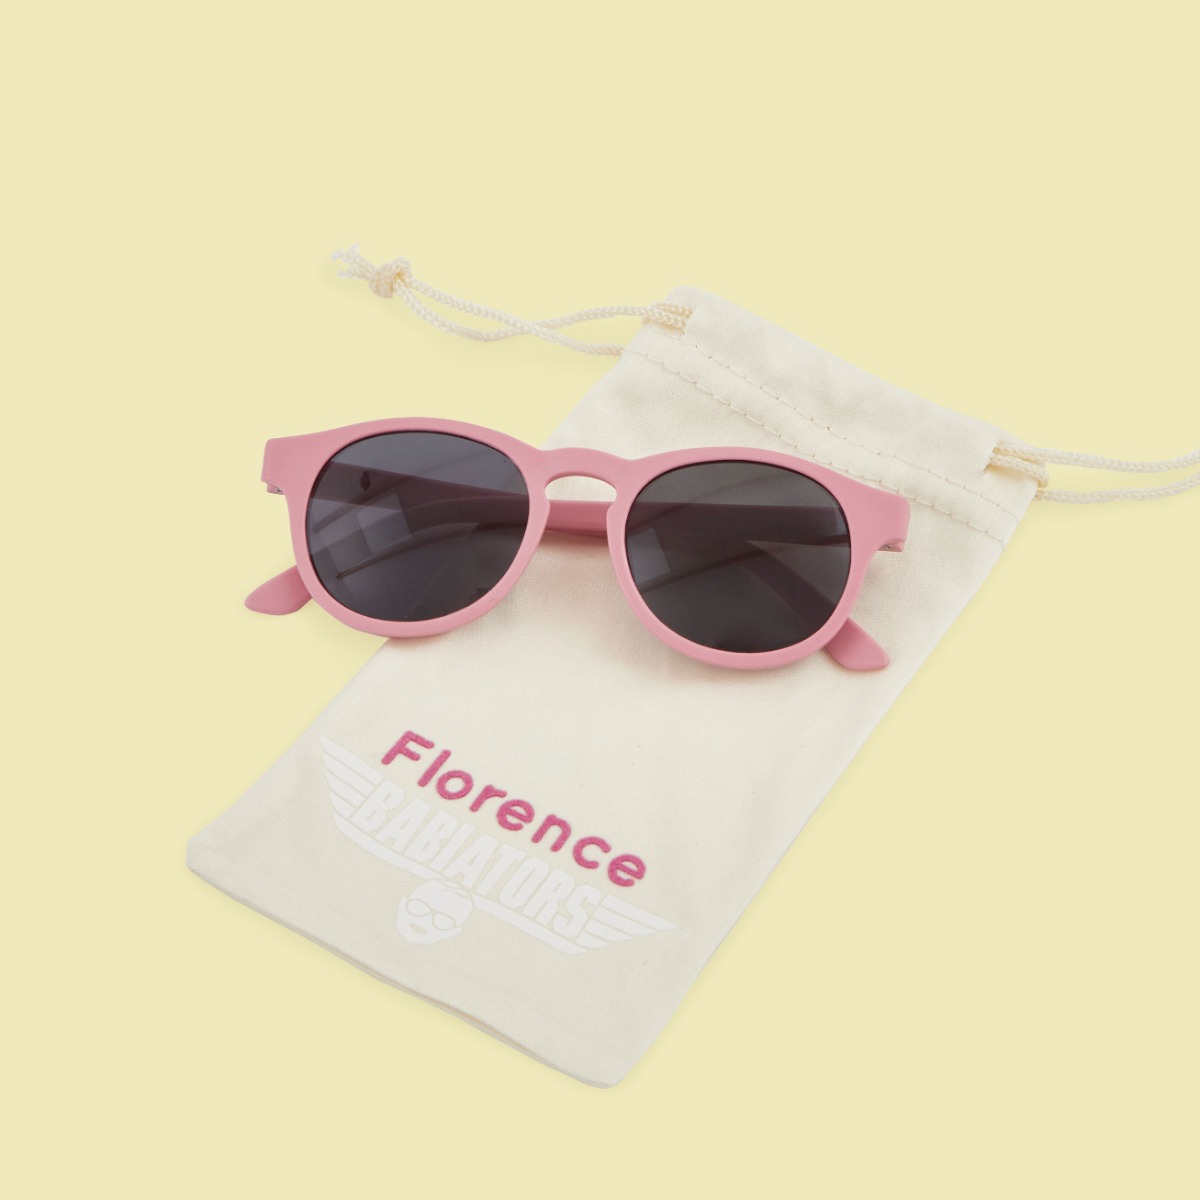 Personalised Pink Babiators Sunglasses with Bag